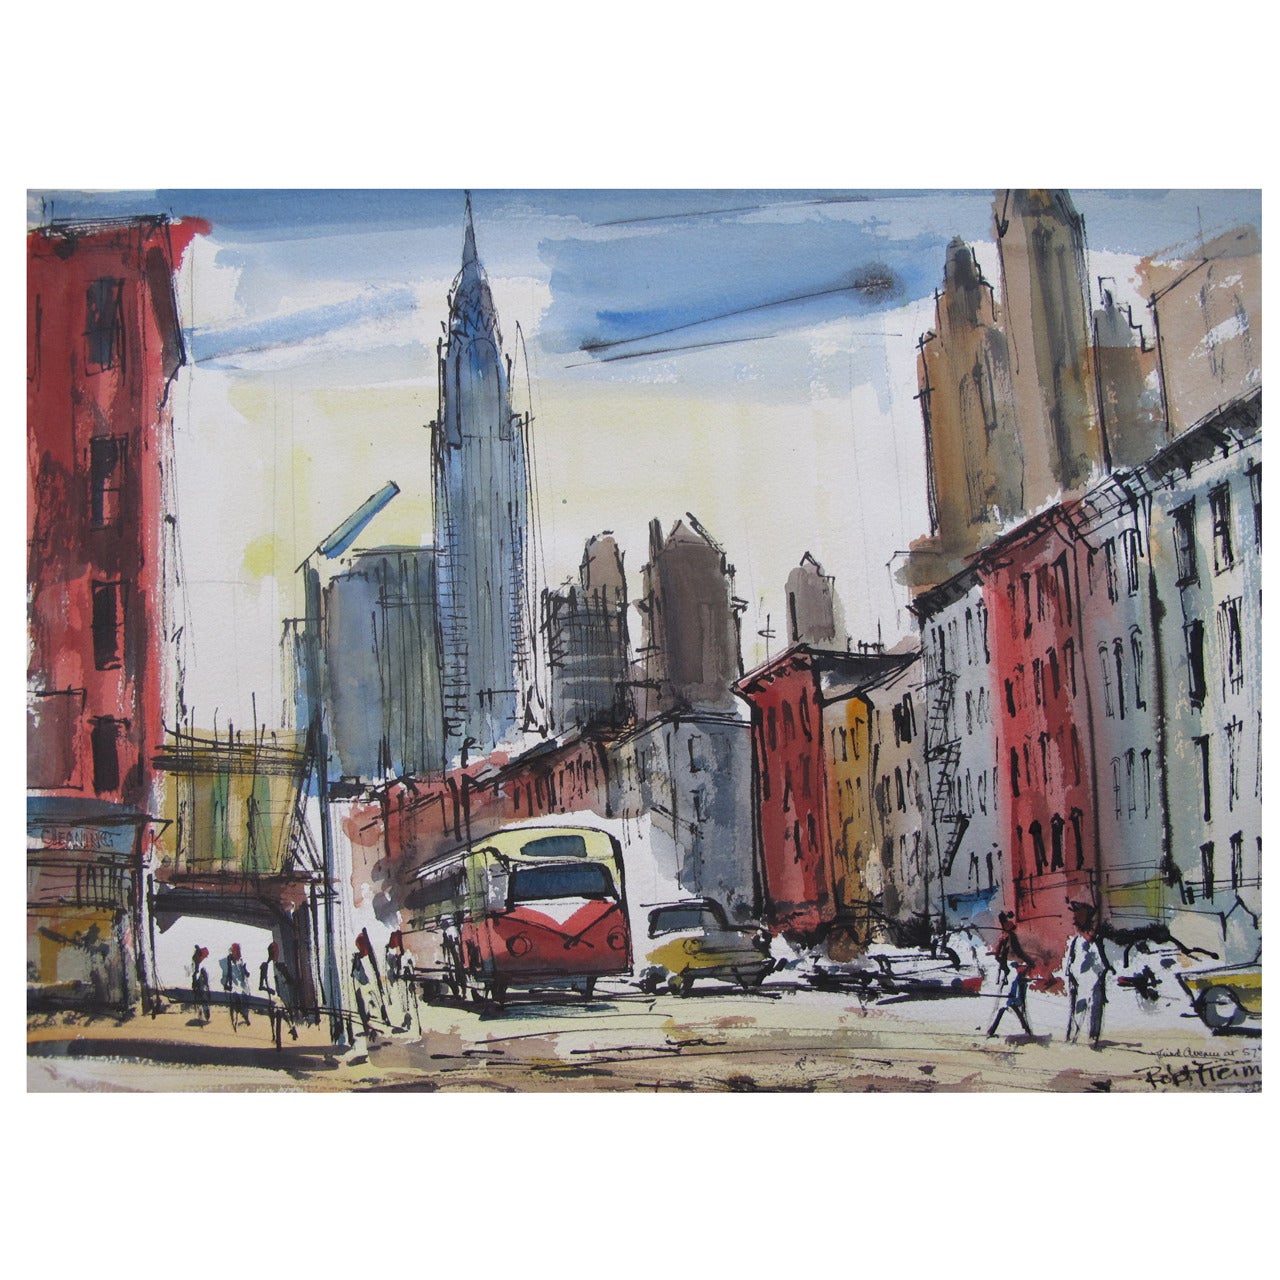 Robert Freiman, 1956, "Third Avenue at 57th Street"